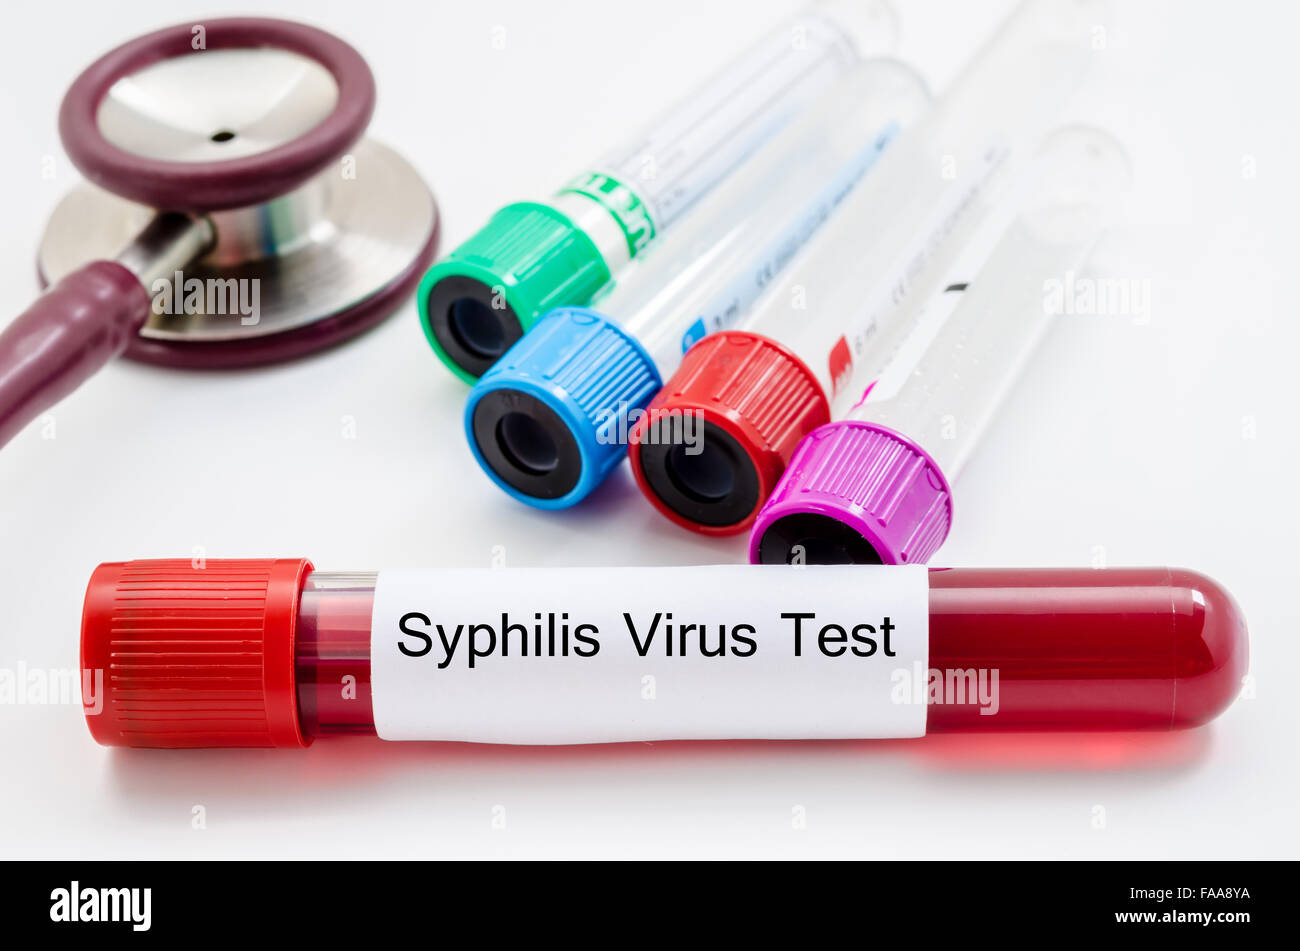 Syphilis virus blood sample collection tube with stethoscope on white background. Stock Photo